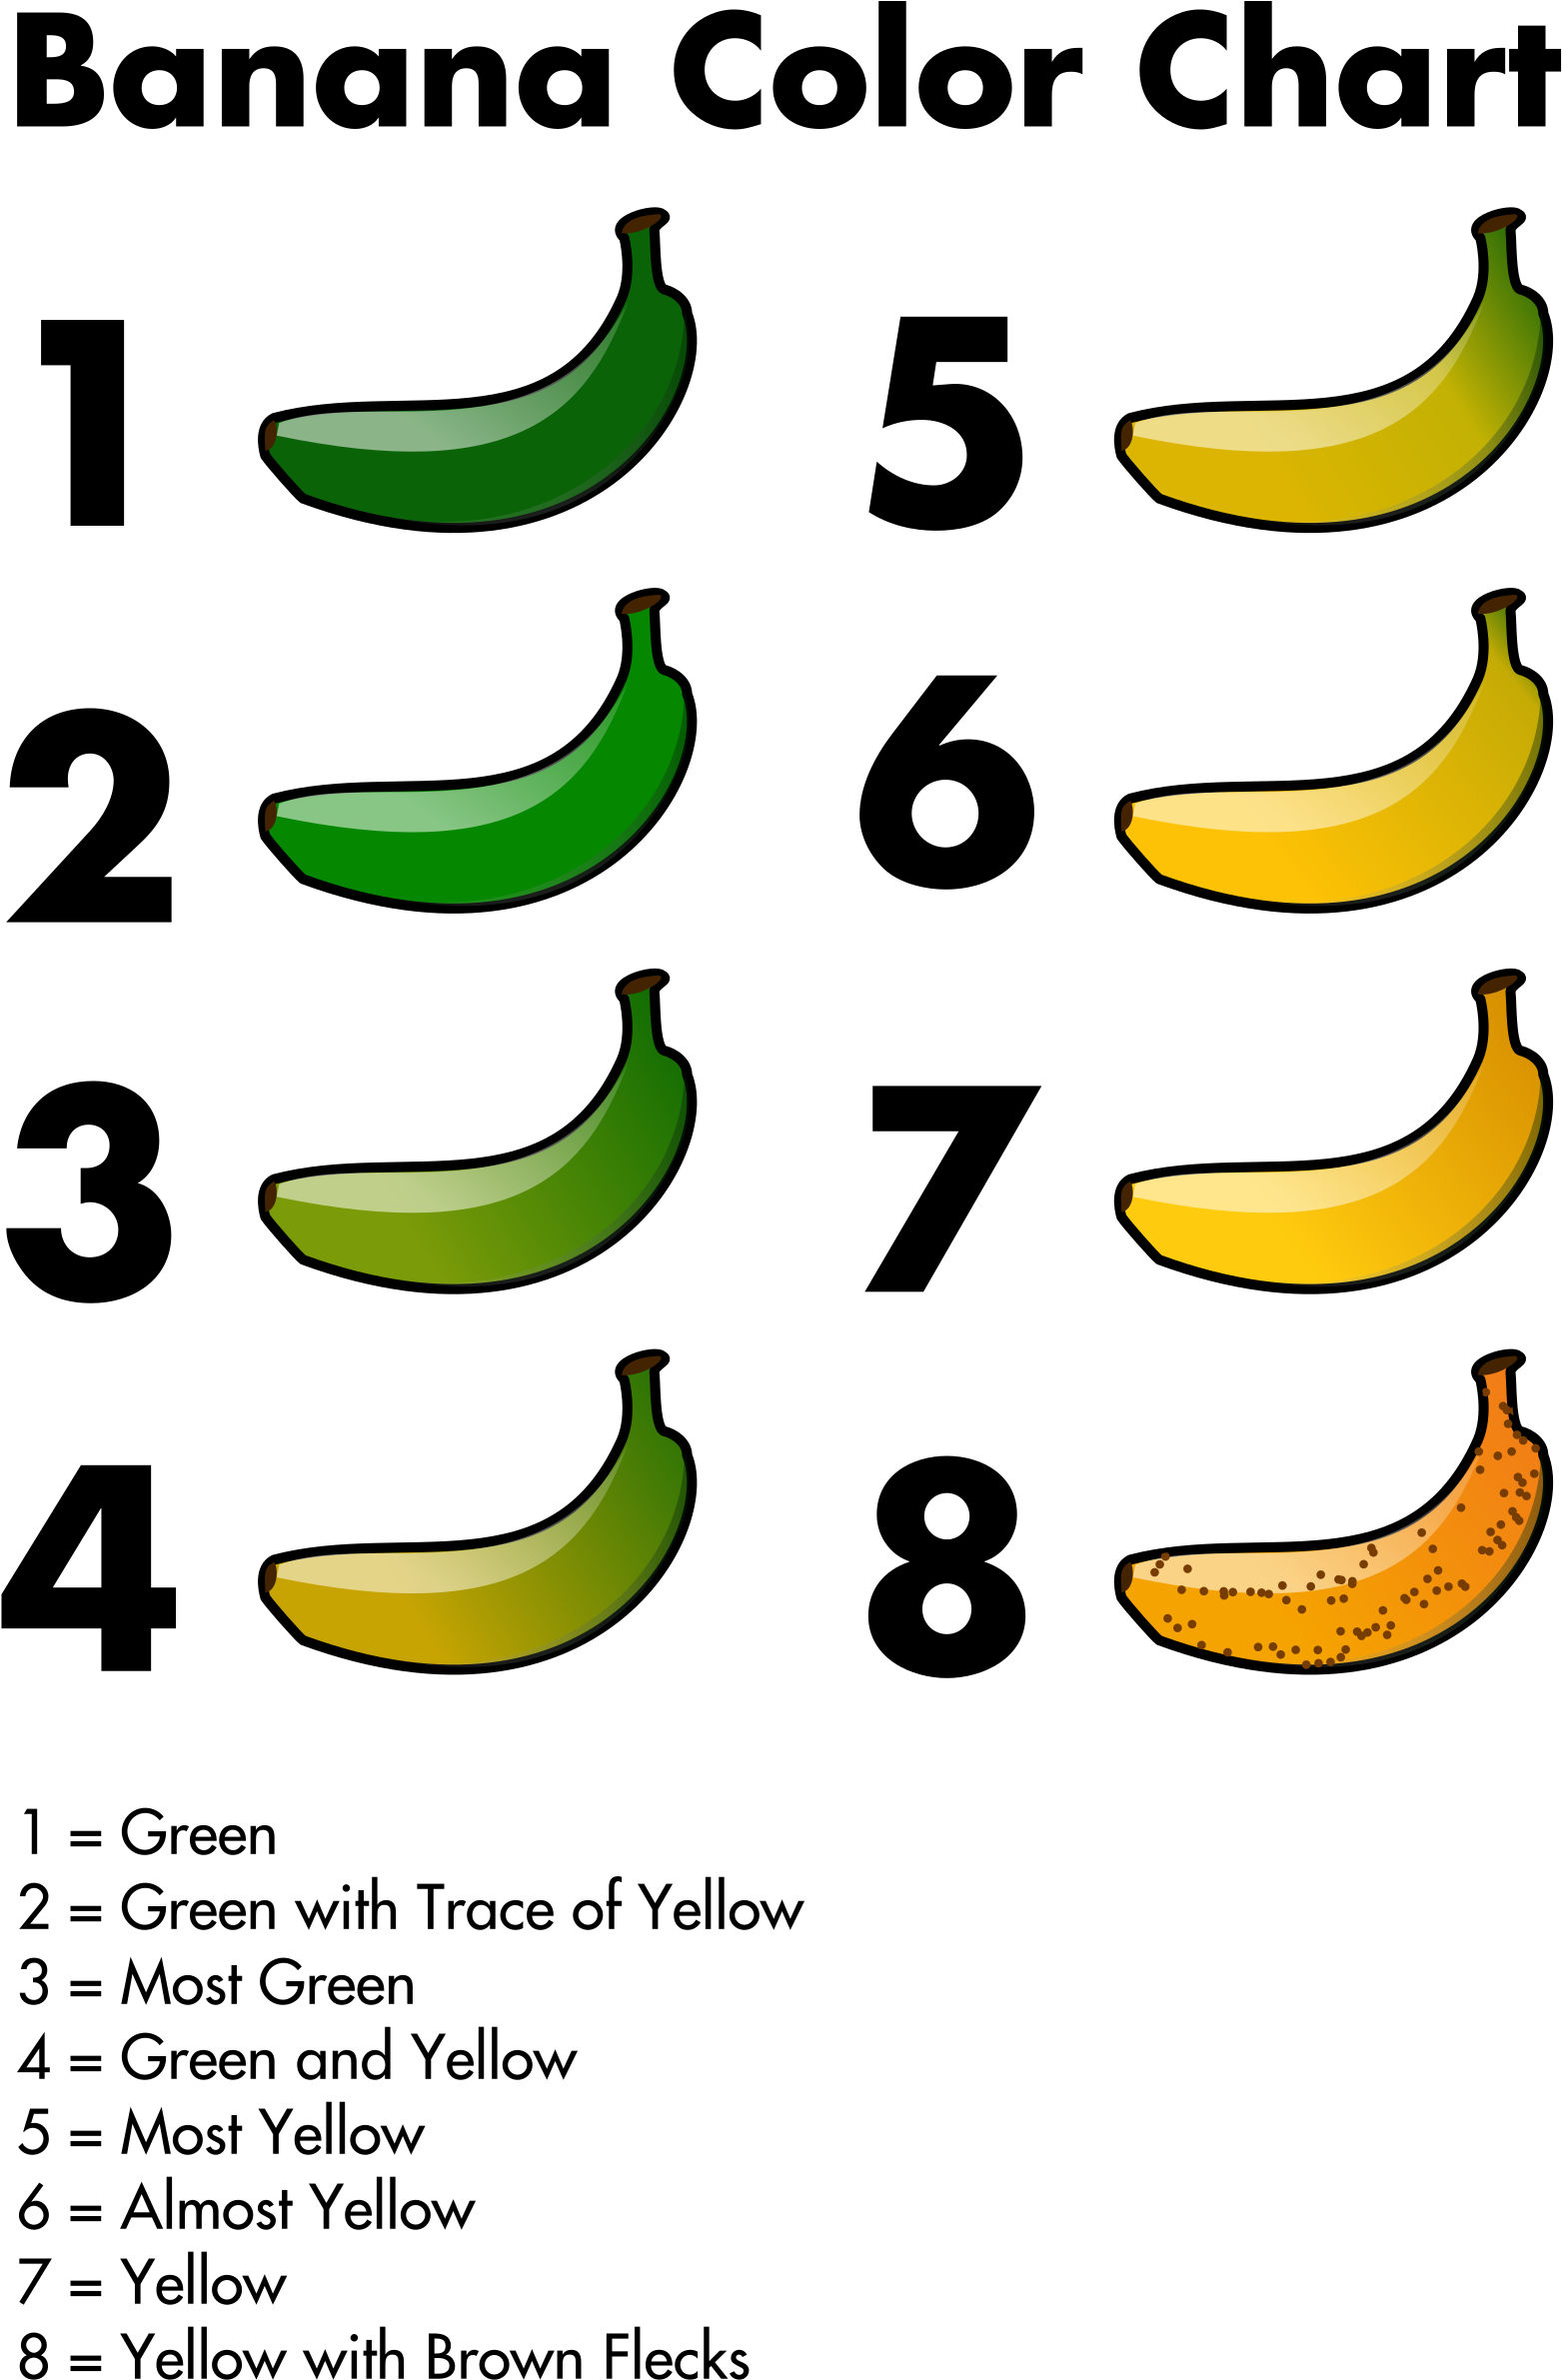 Big Image - Color Is A Ripe Banana (1612x2400)